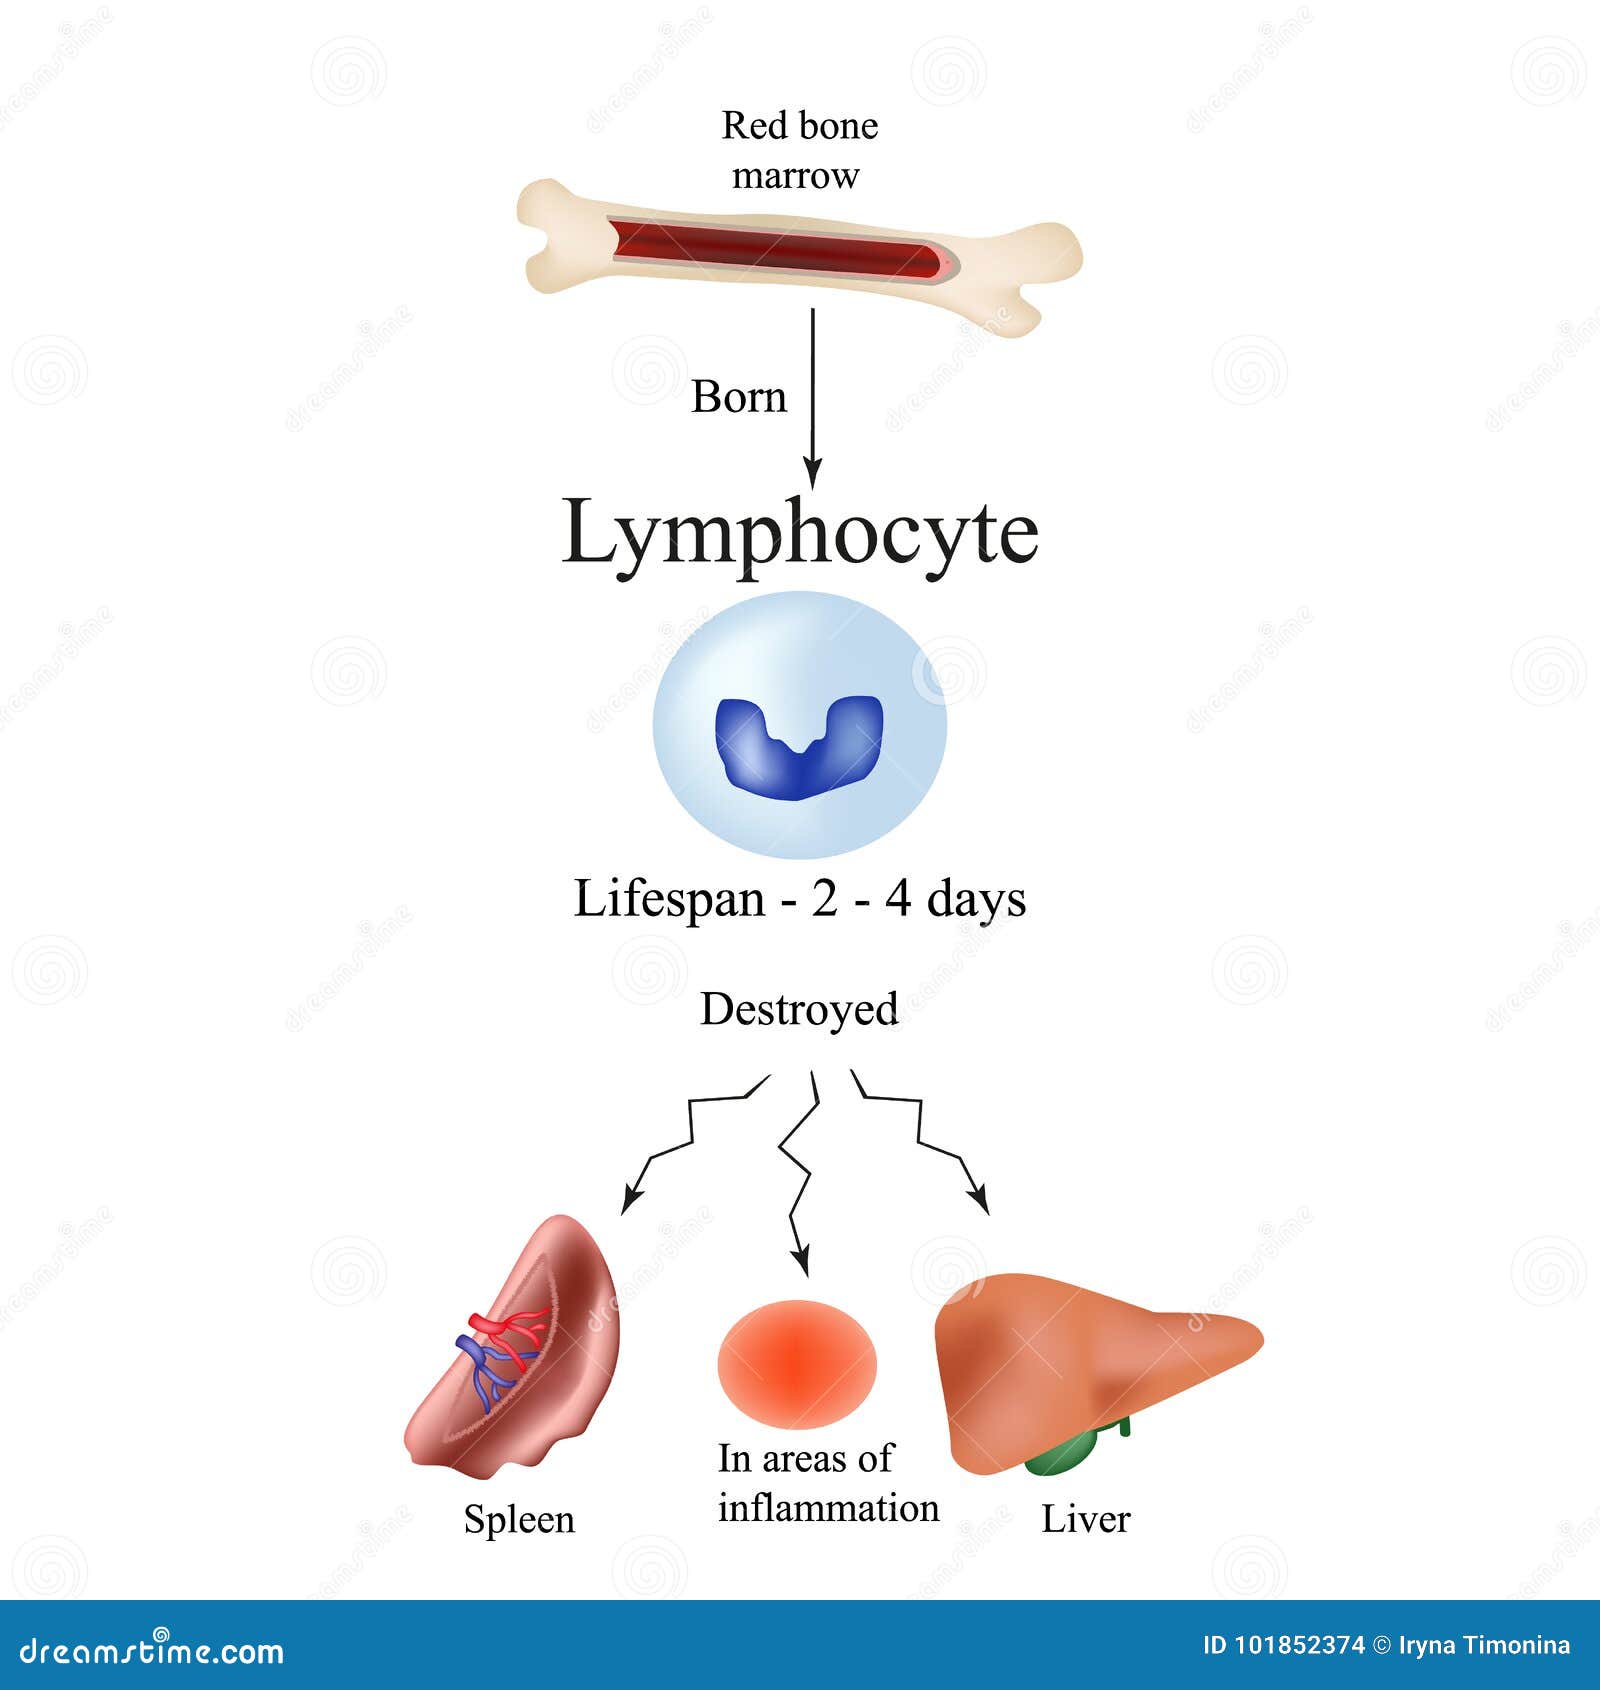 limbo leukocytes in bone marrow. dieback leukocytes in the spleen, liver and at sites of inflammation. the life of leukocyte.